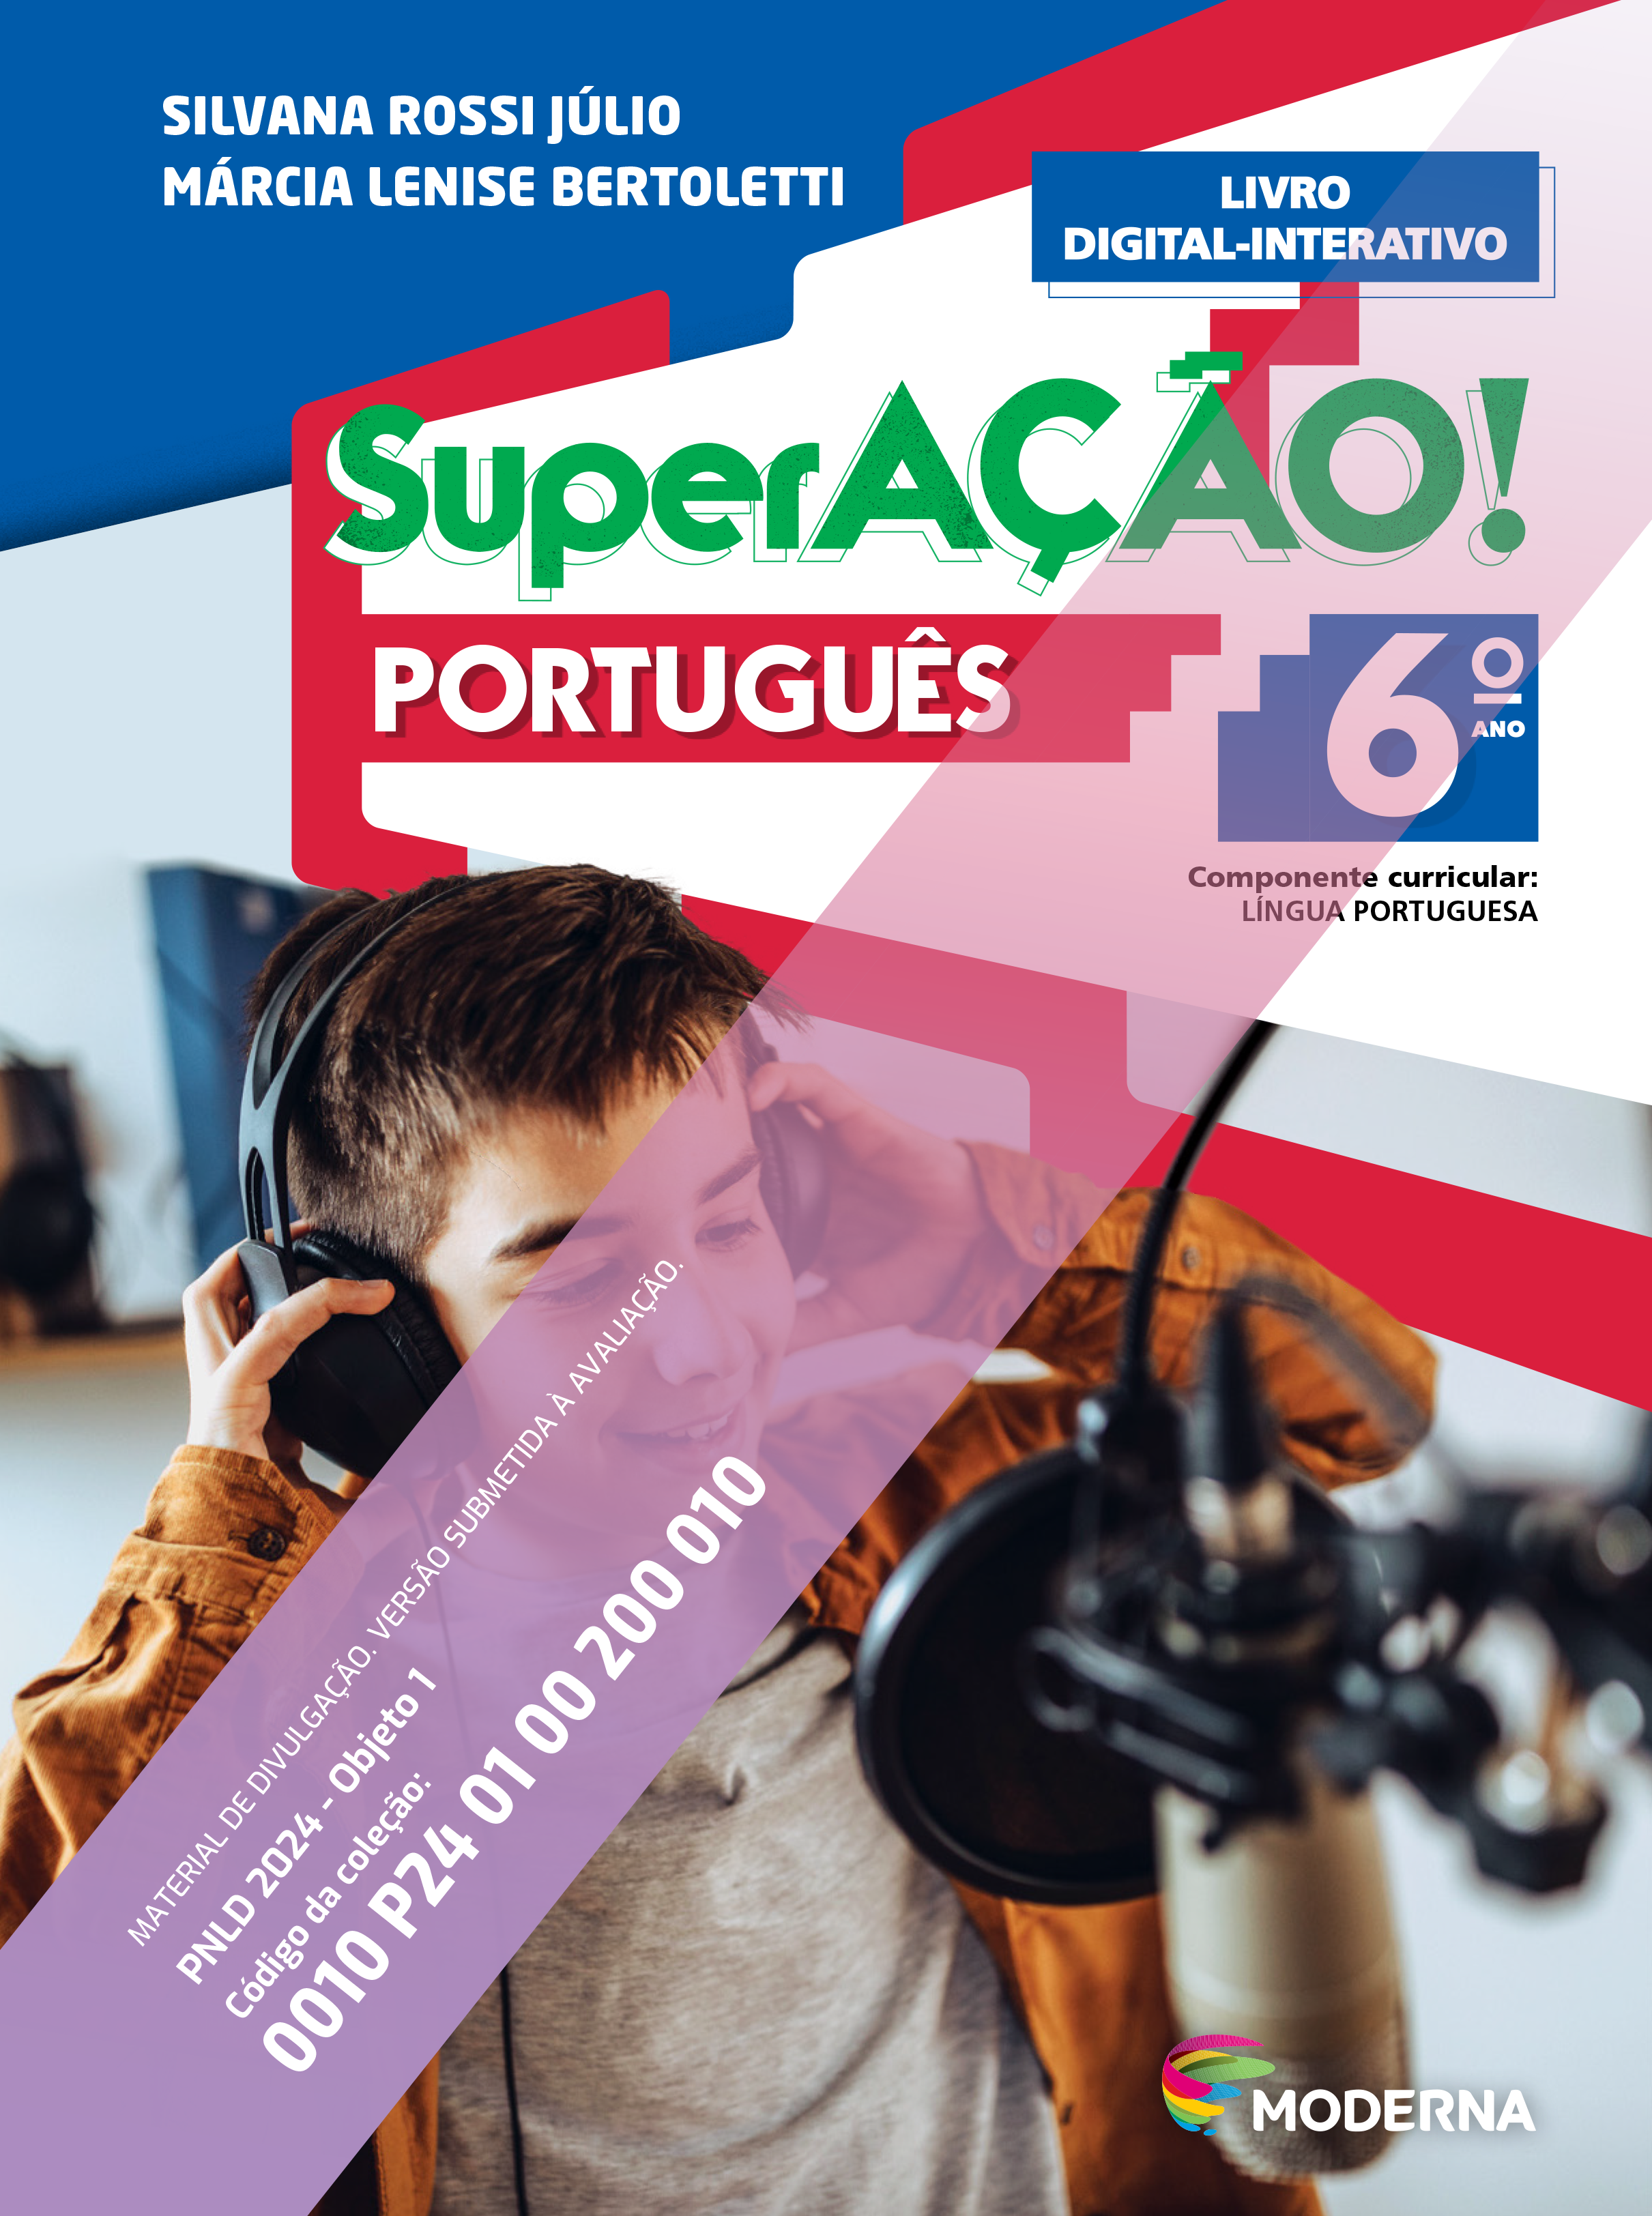 Araribá Conecta - Português